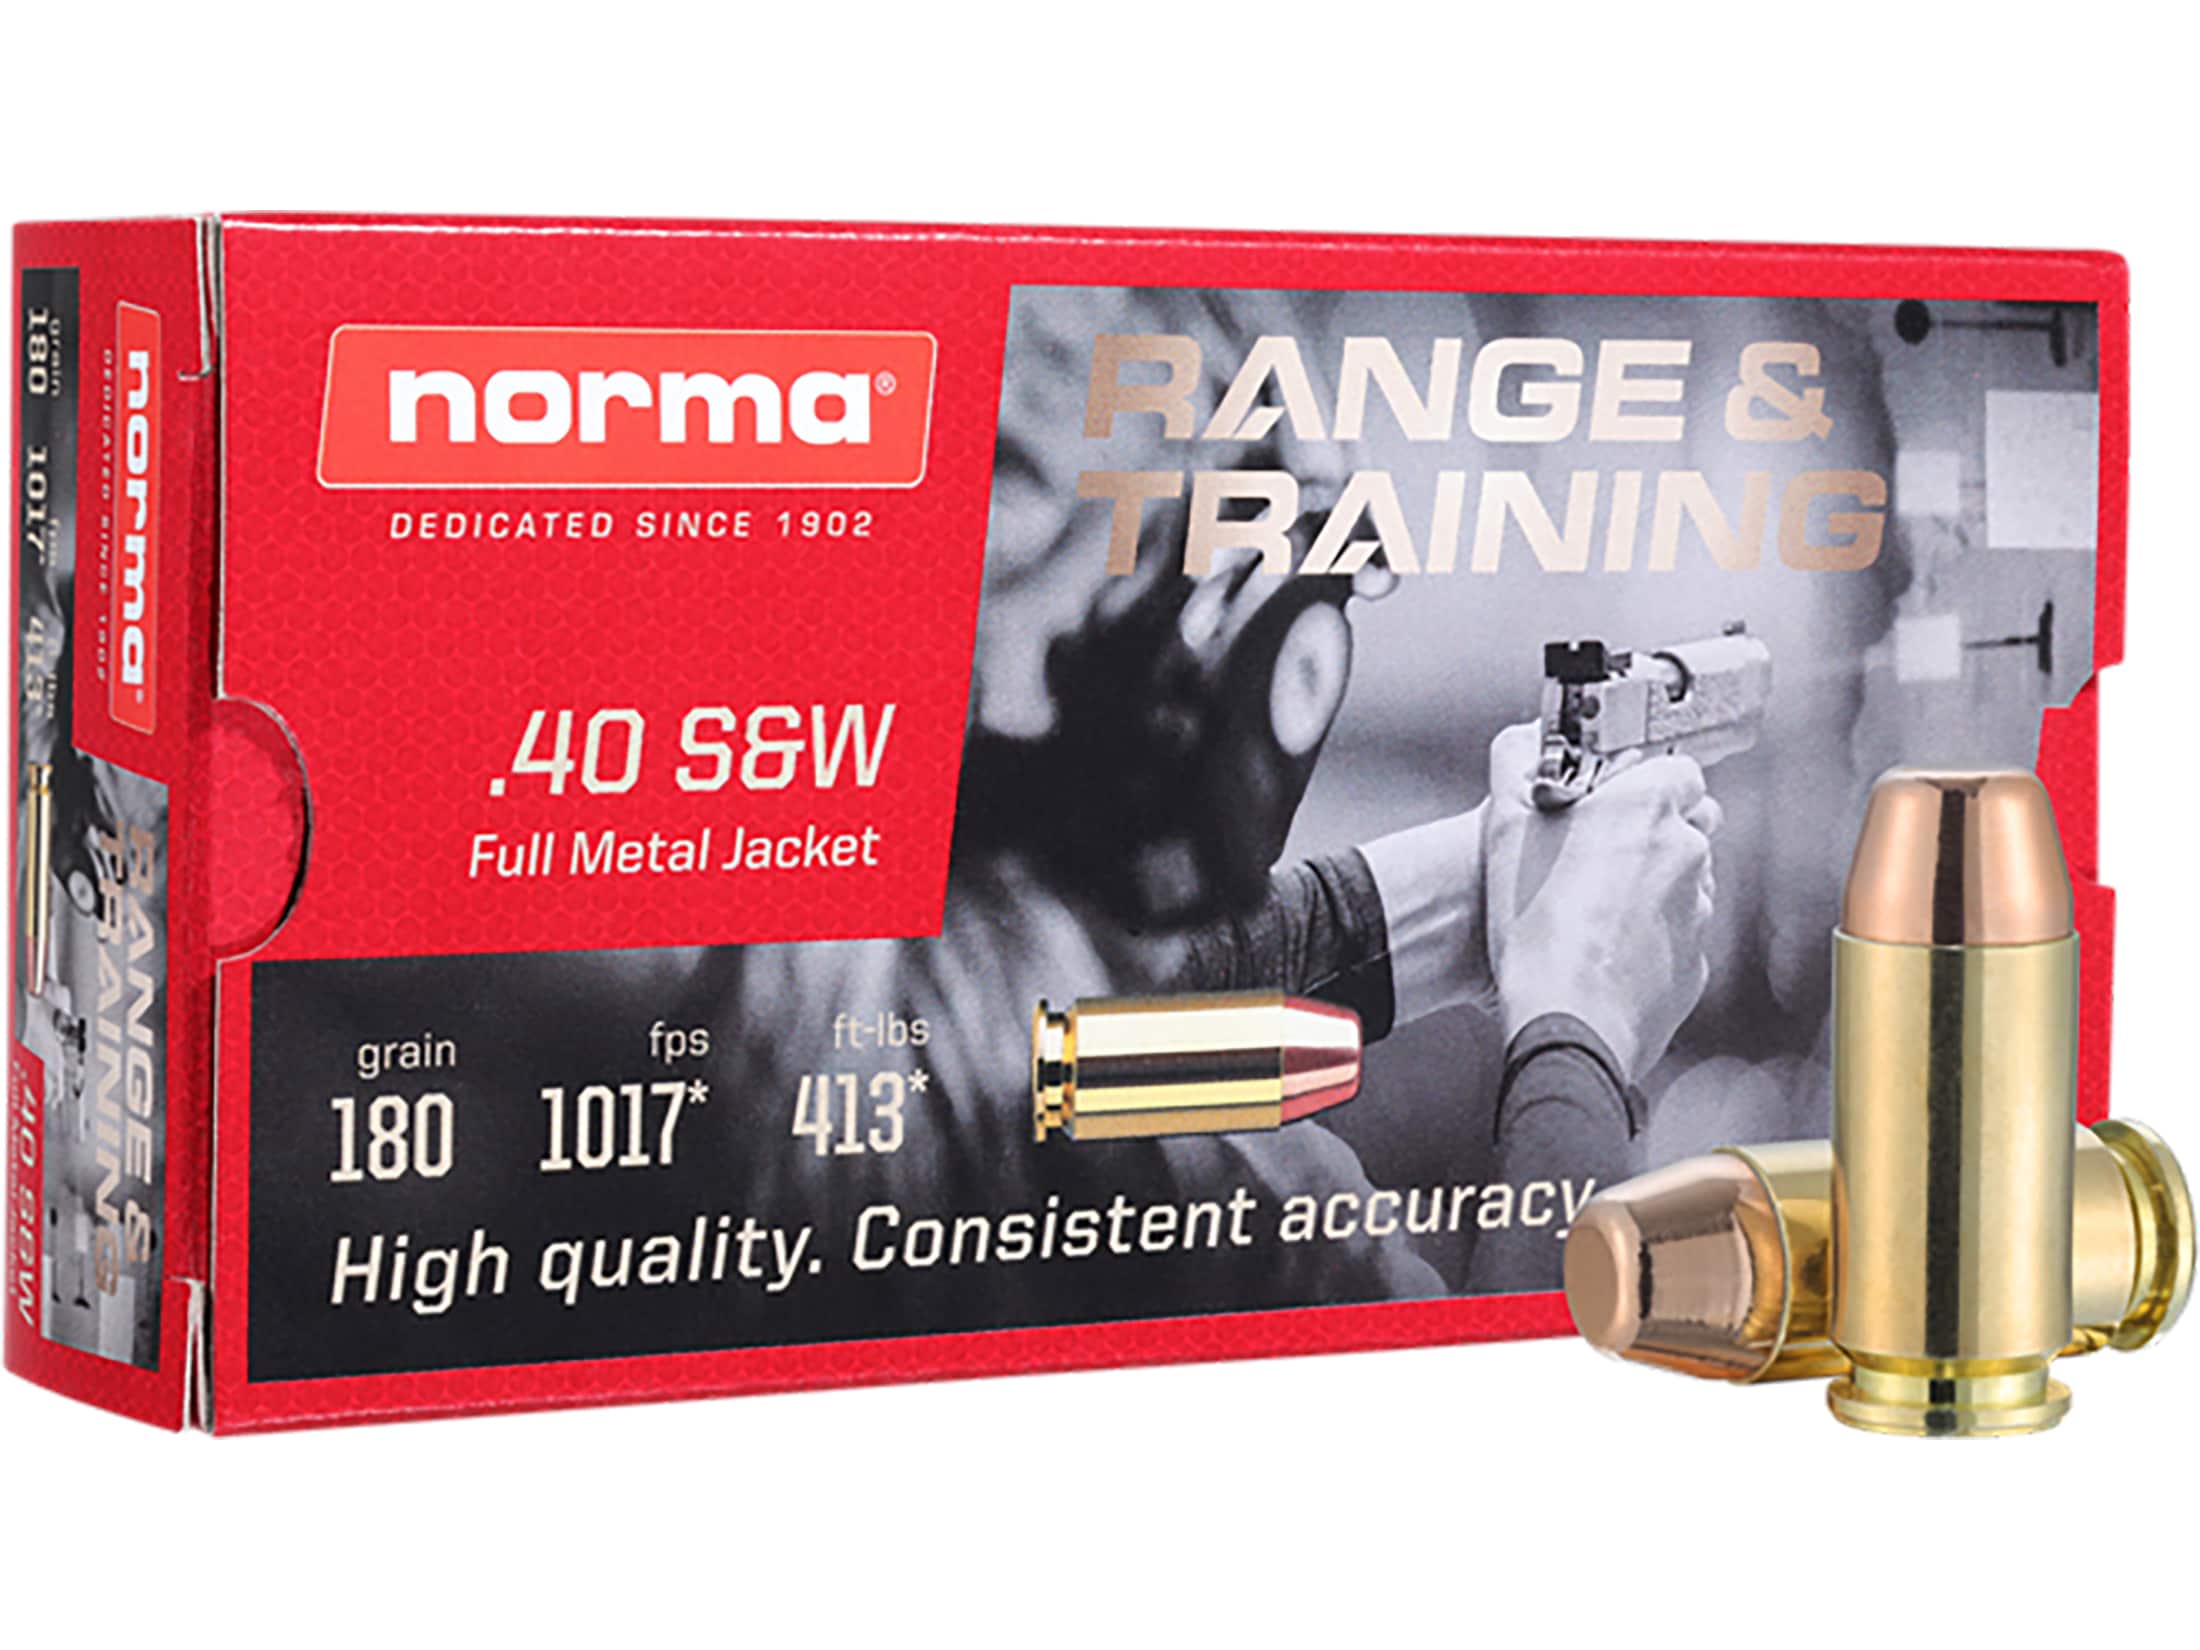 Norma Range & Training Ammo 40 S&W 180 Grain Full Metal Jacket Box of